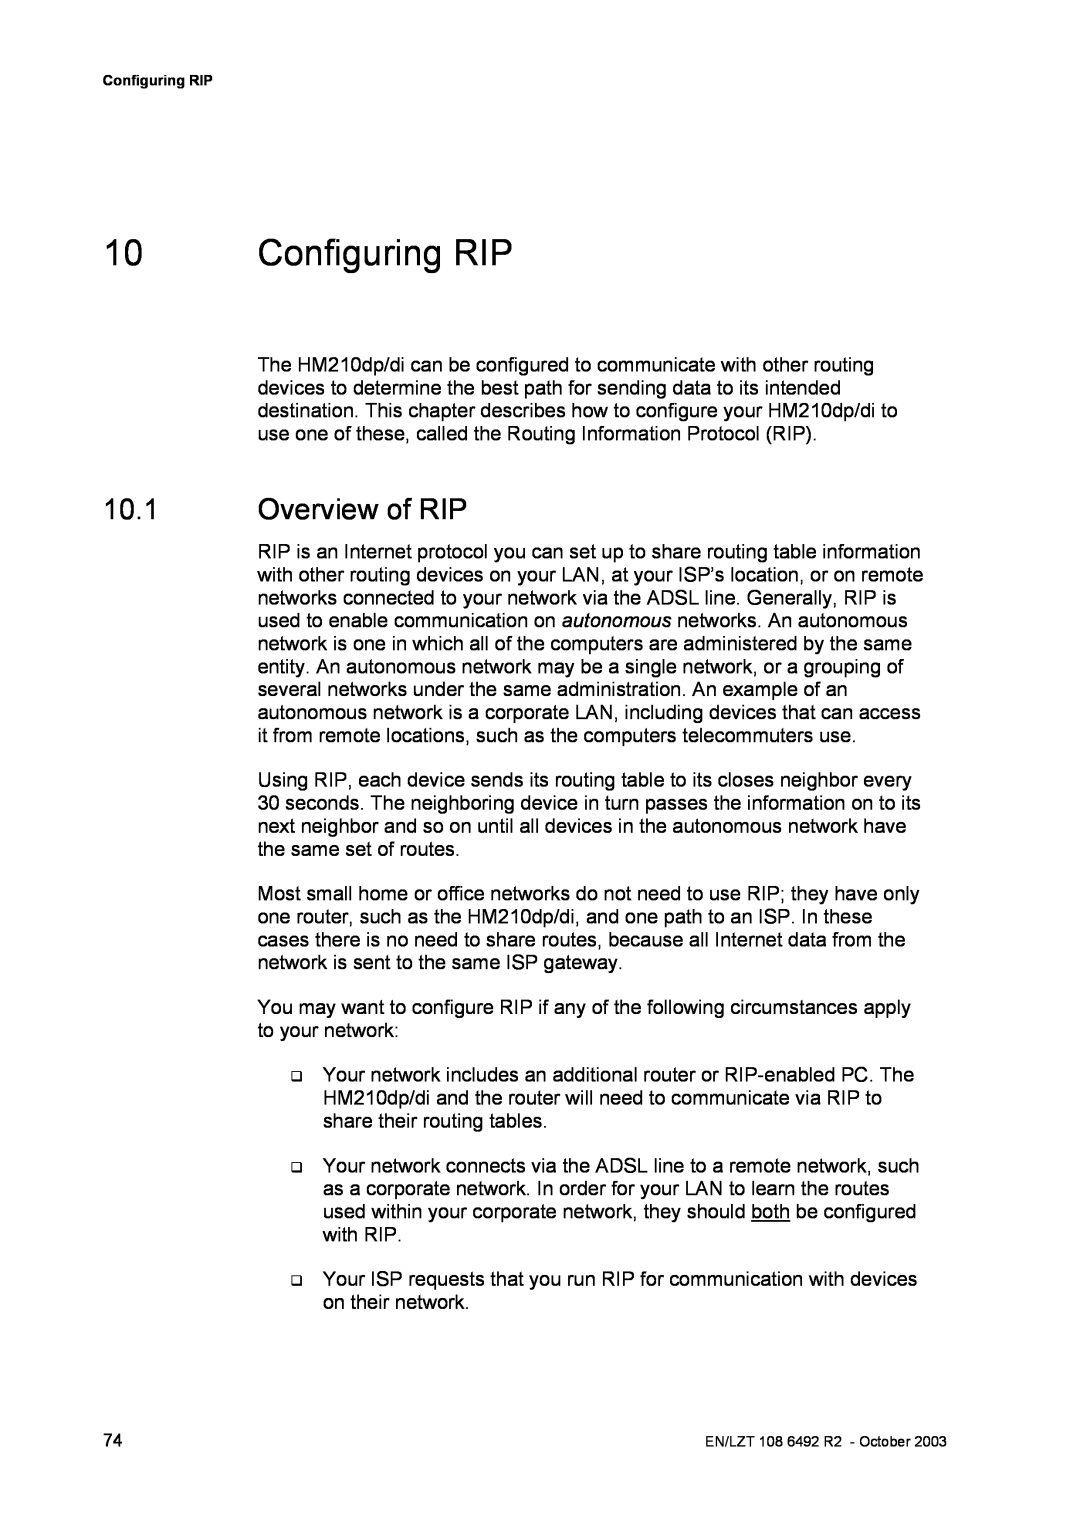 Garmin HM210DP/DI manual Configuring RIP, Overview of RIP 